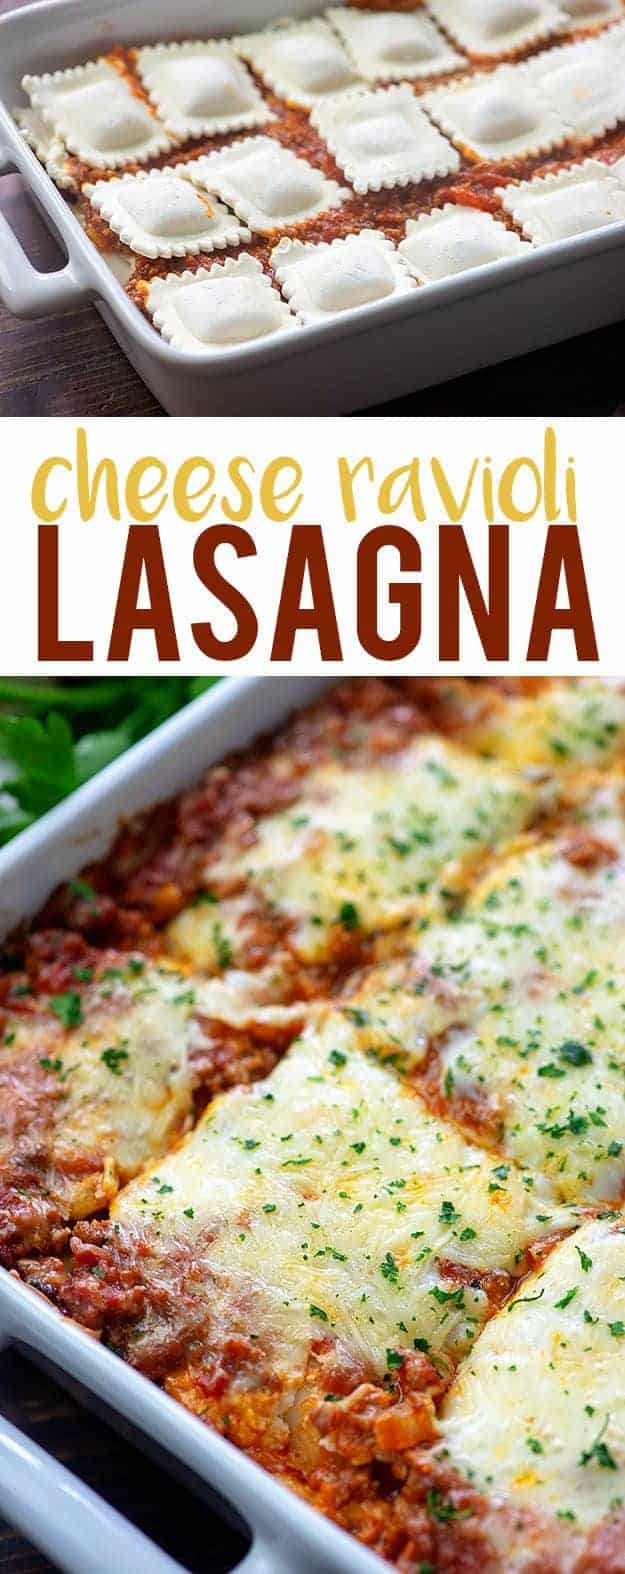 Lasagna in a white baking dish.